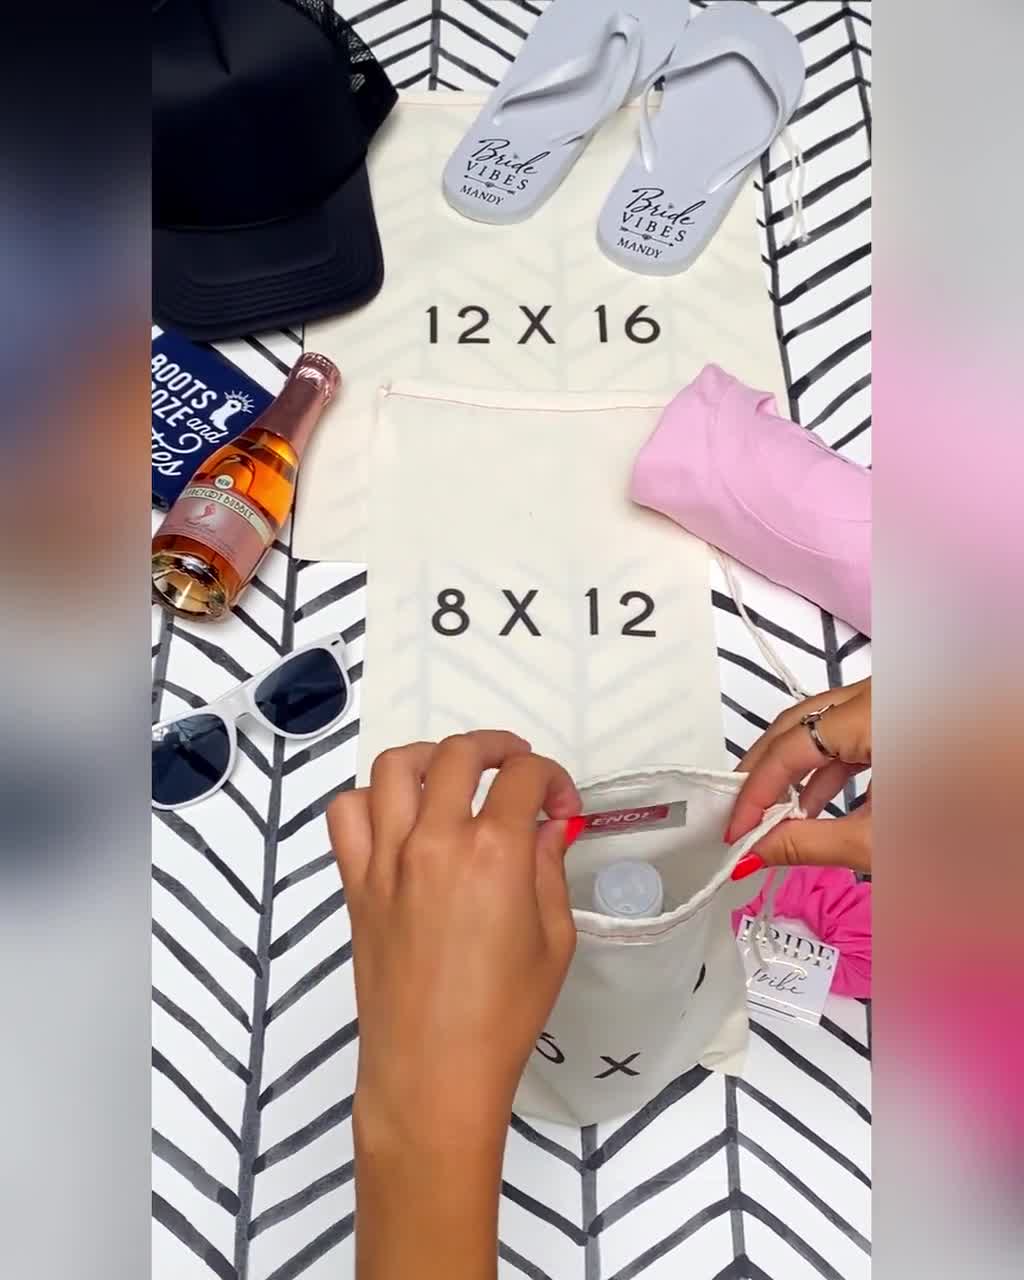 Team Groom Bachelor Party Favors Custom Hangover Kits for